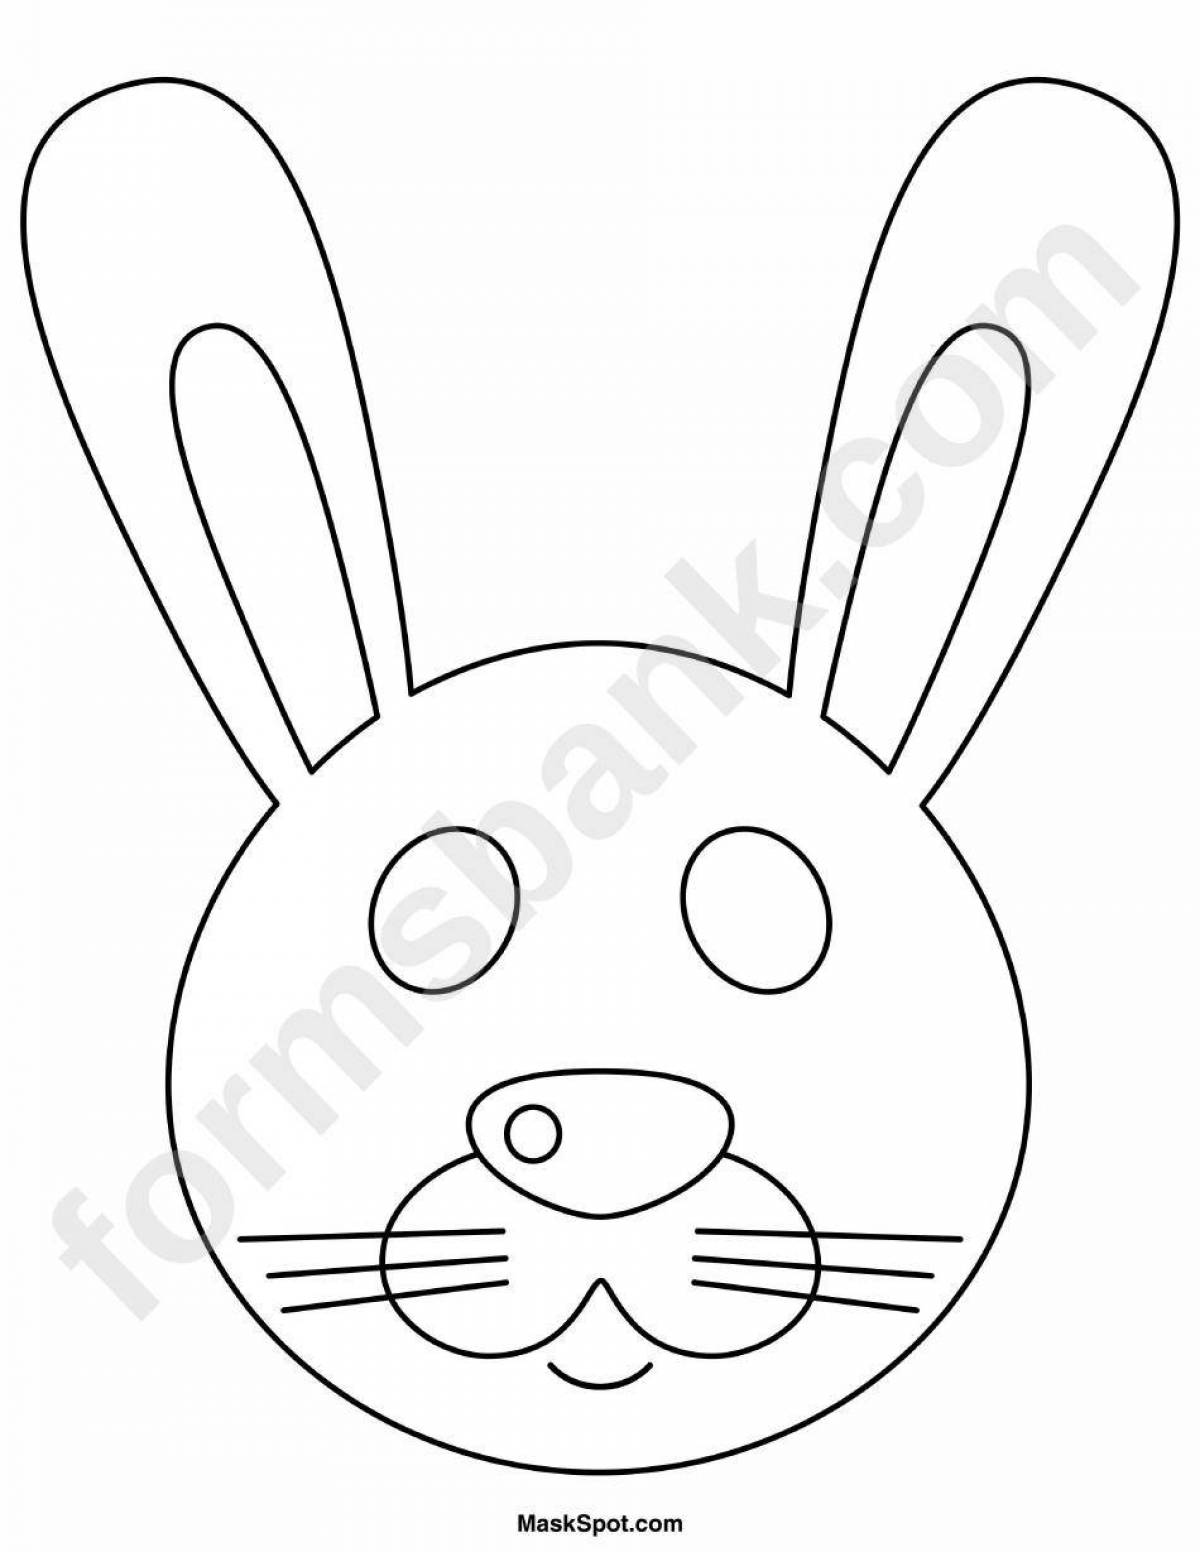 Adorable rabbit head coloring book